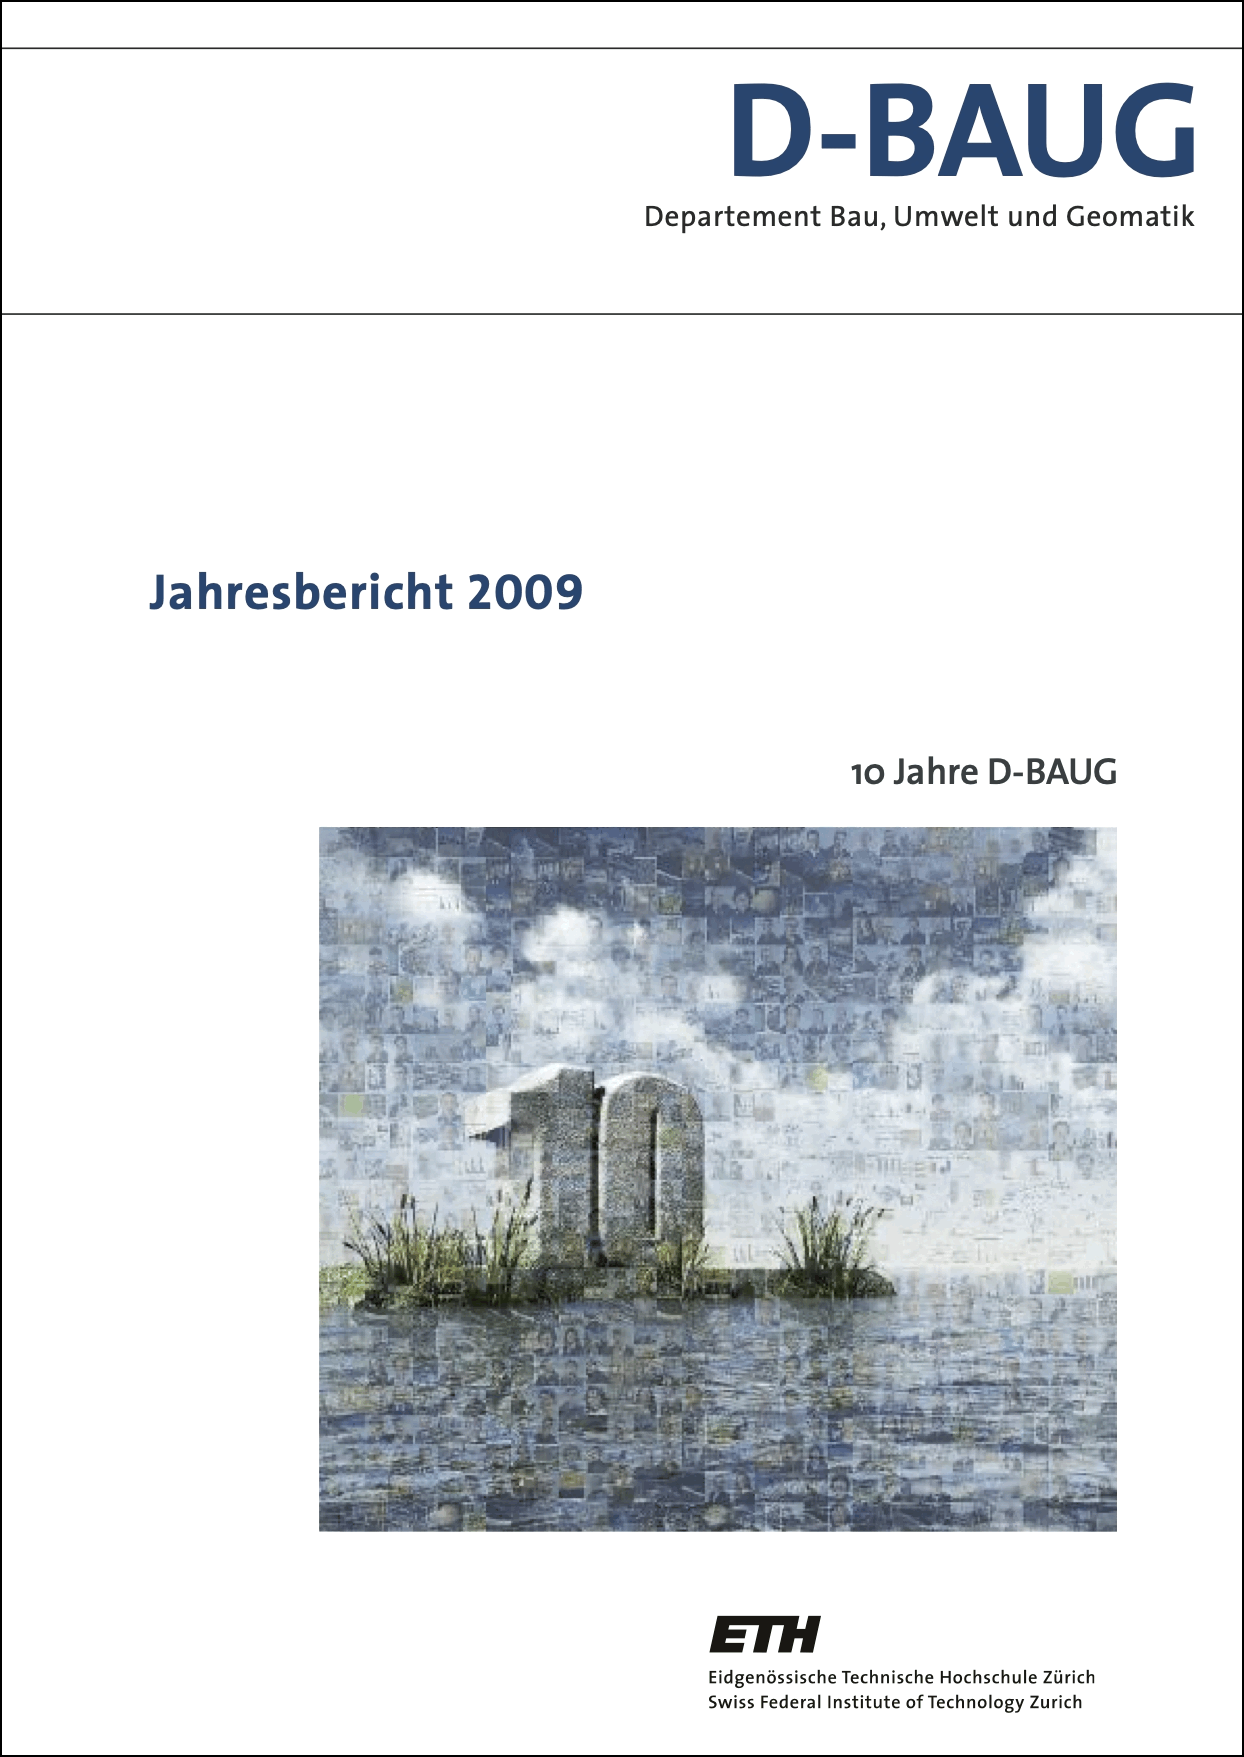 D-BAUG Annual report 2009